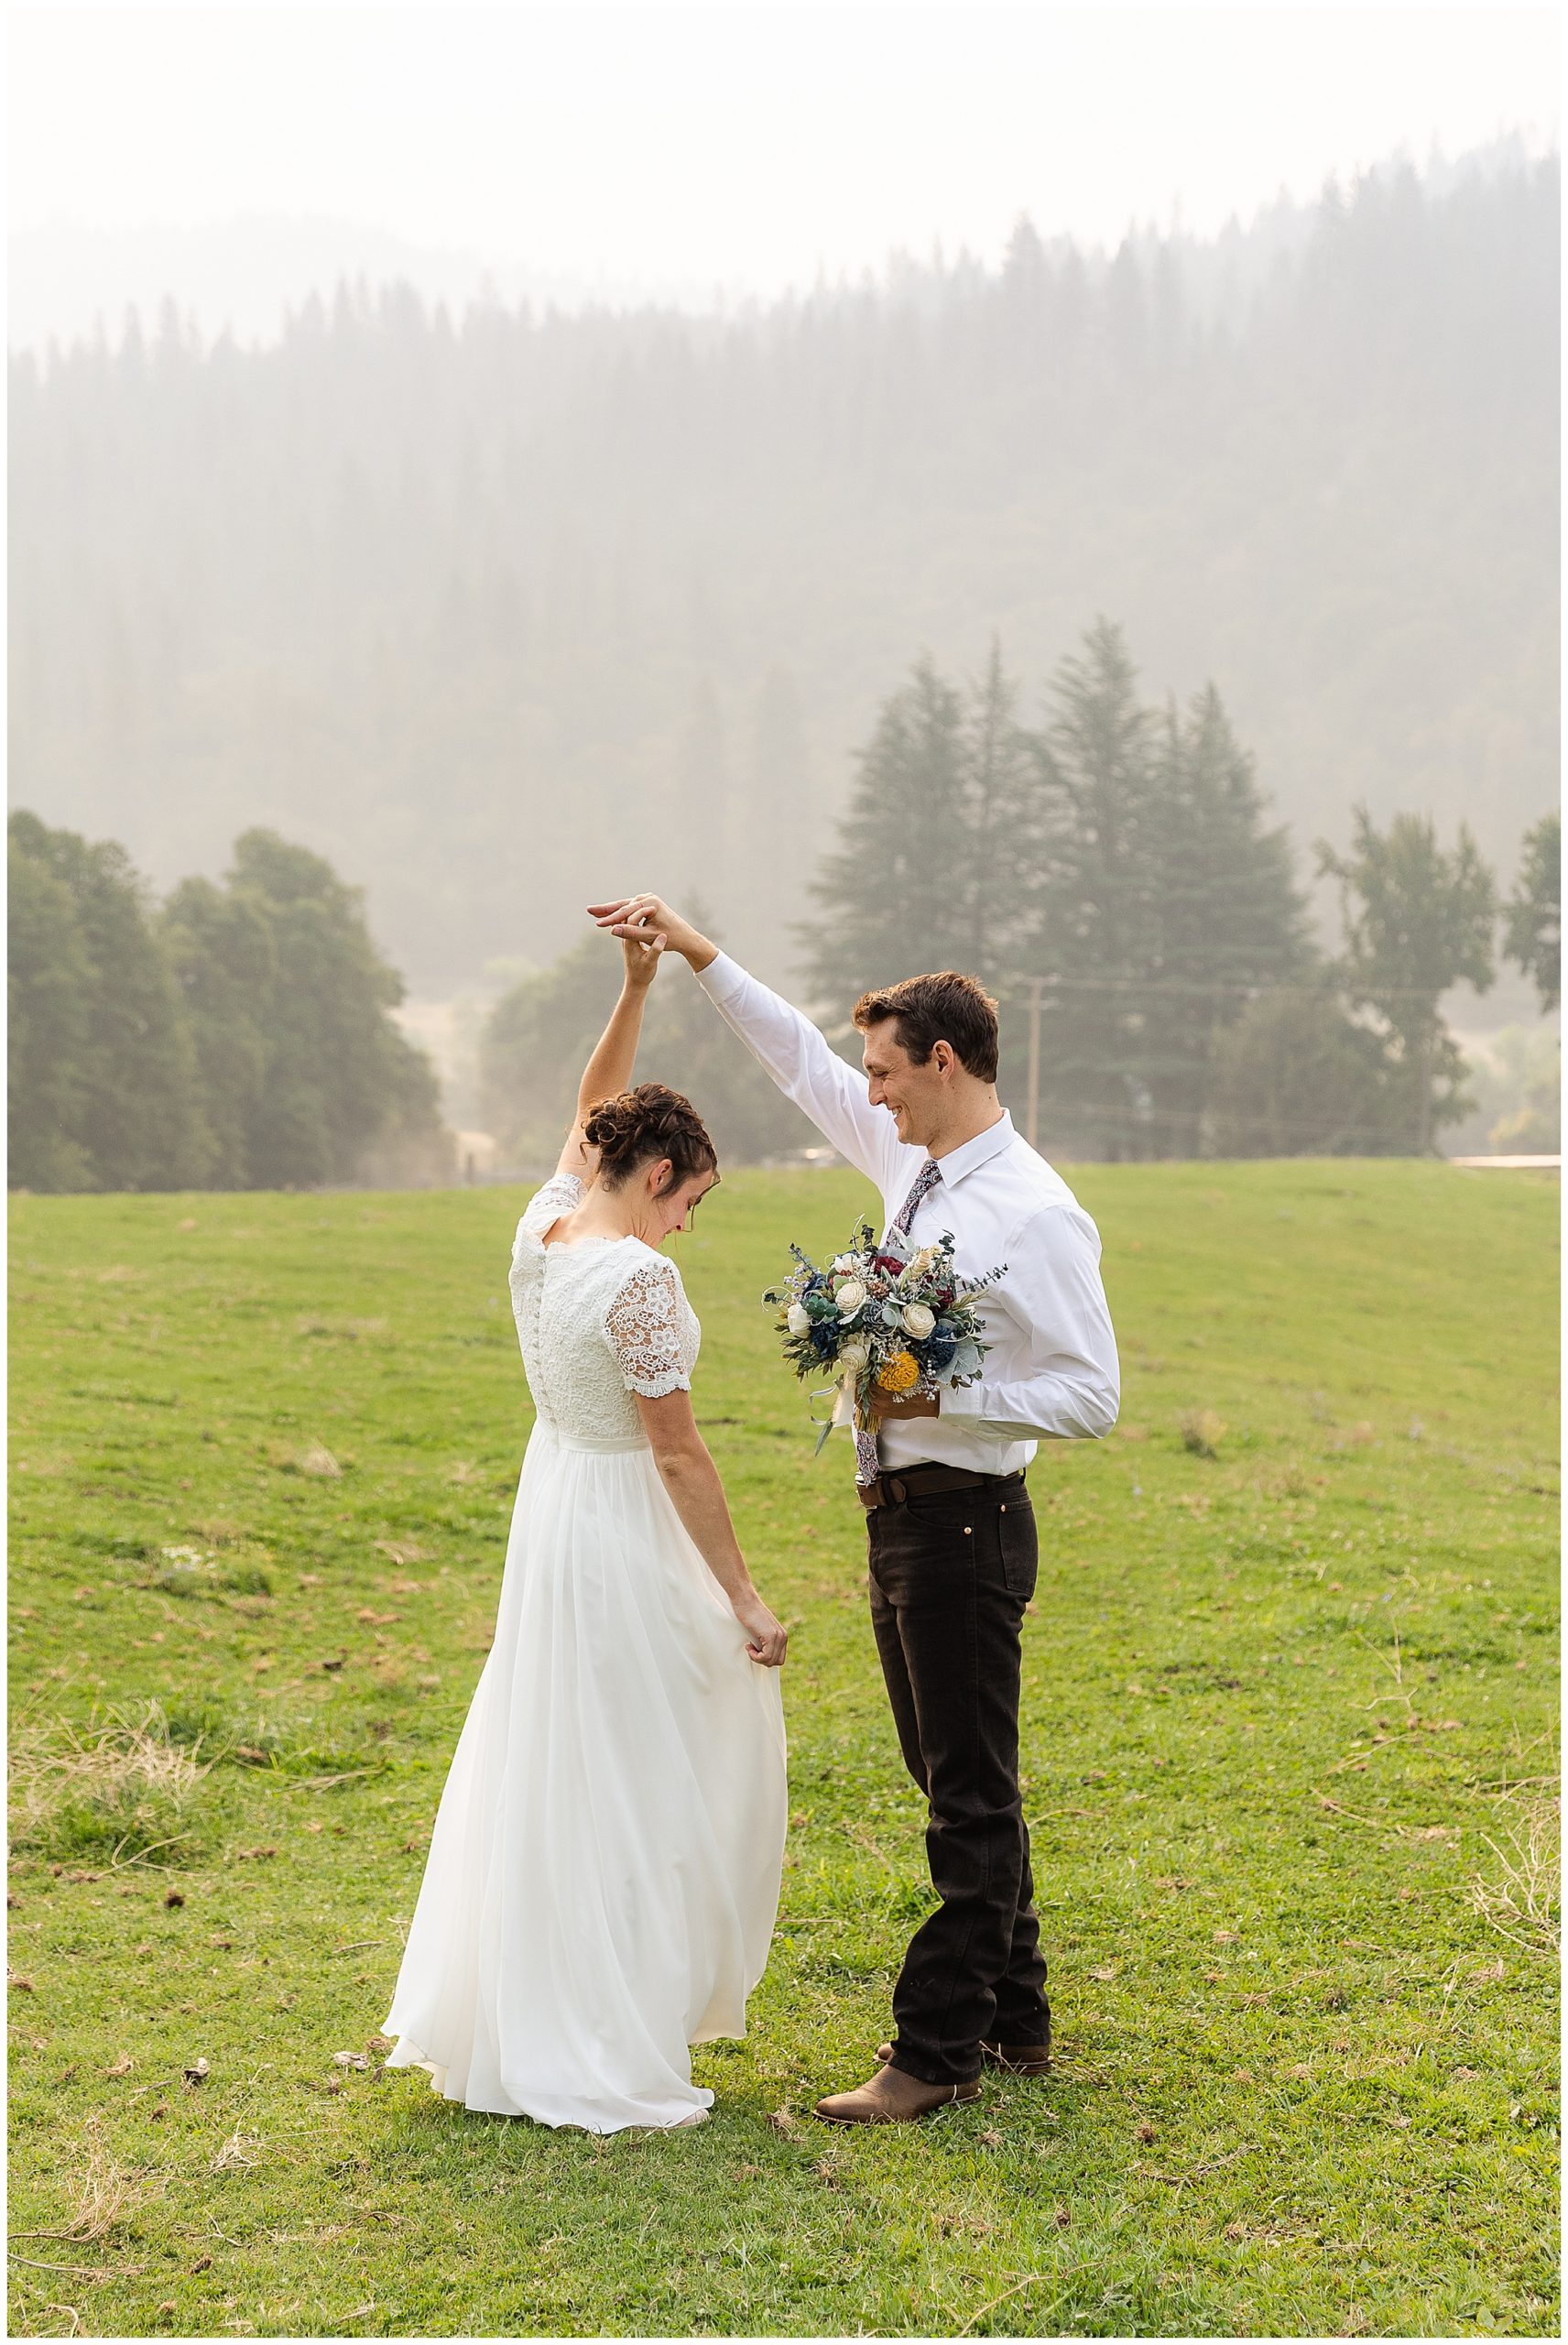 First Look at Country Wedding on Hillside | Treva + Ryan